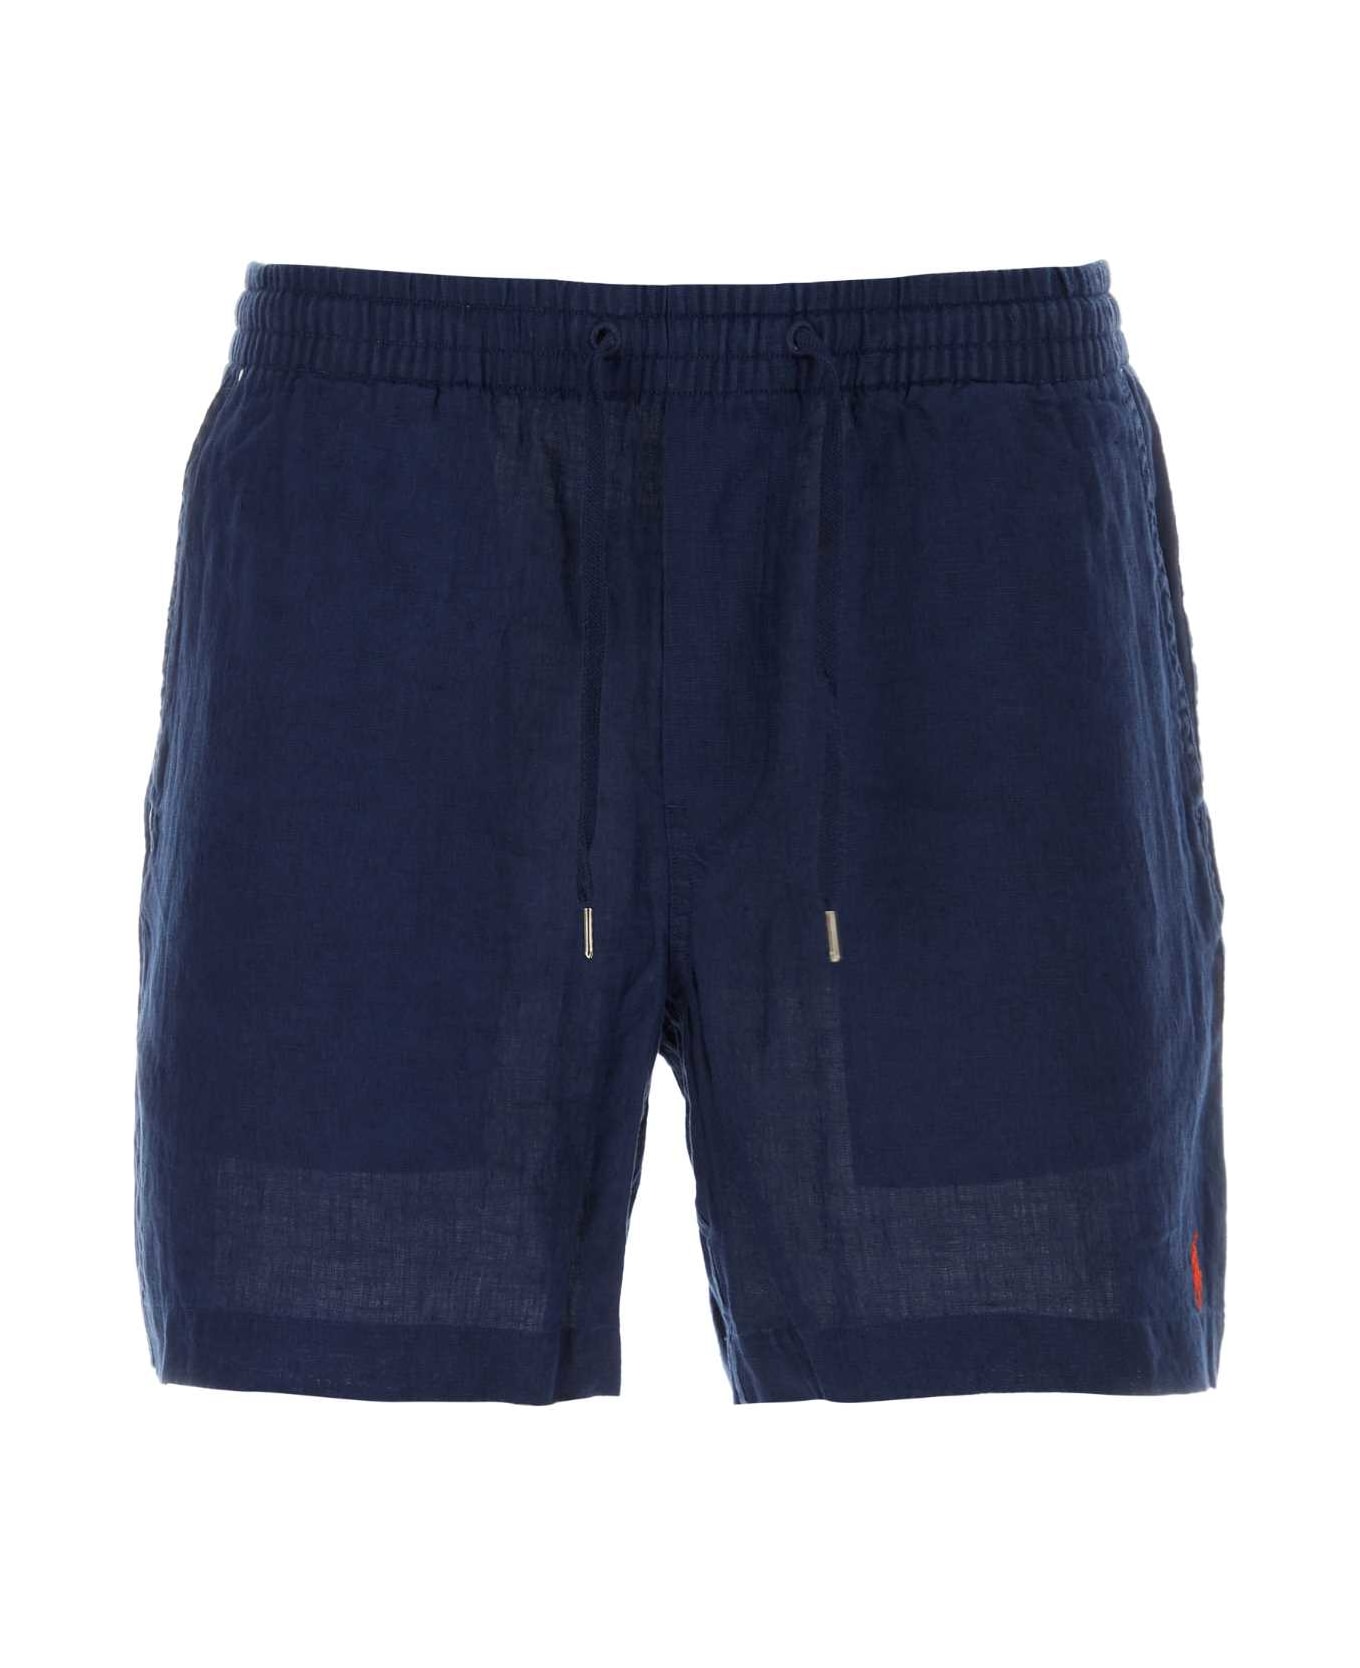 Polo Ralph Lauren Navy Blue Linen Bermuda Shorts - NAVY